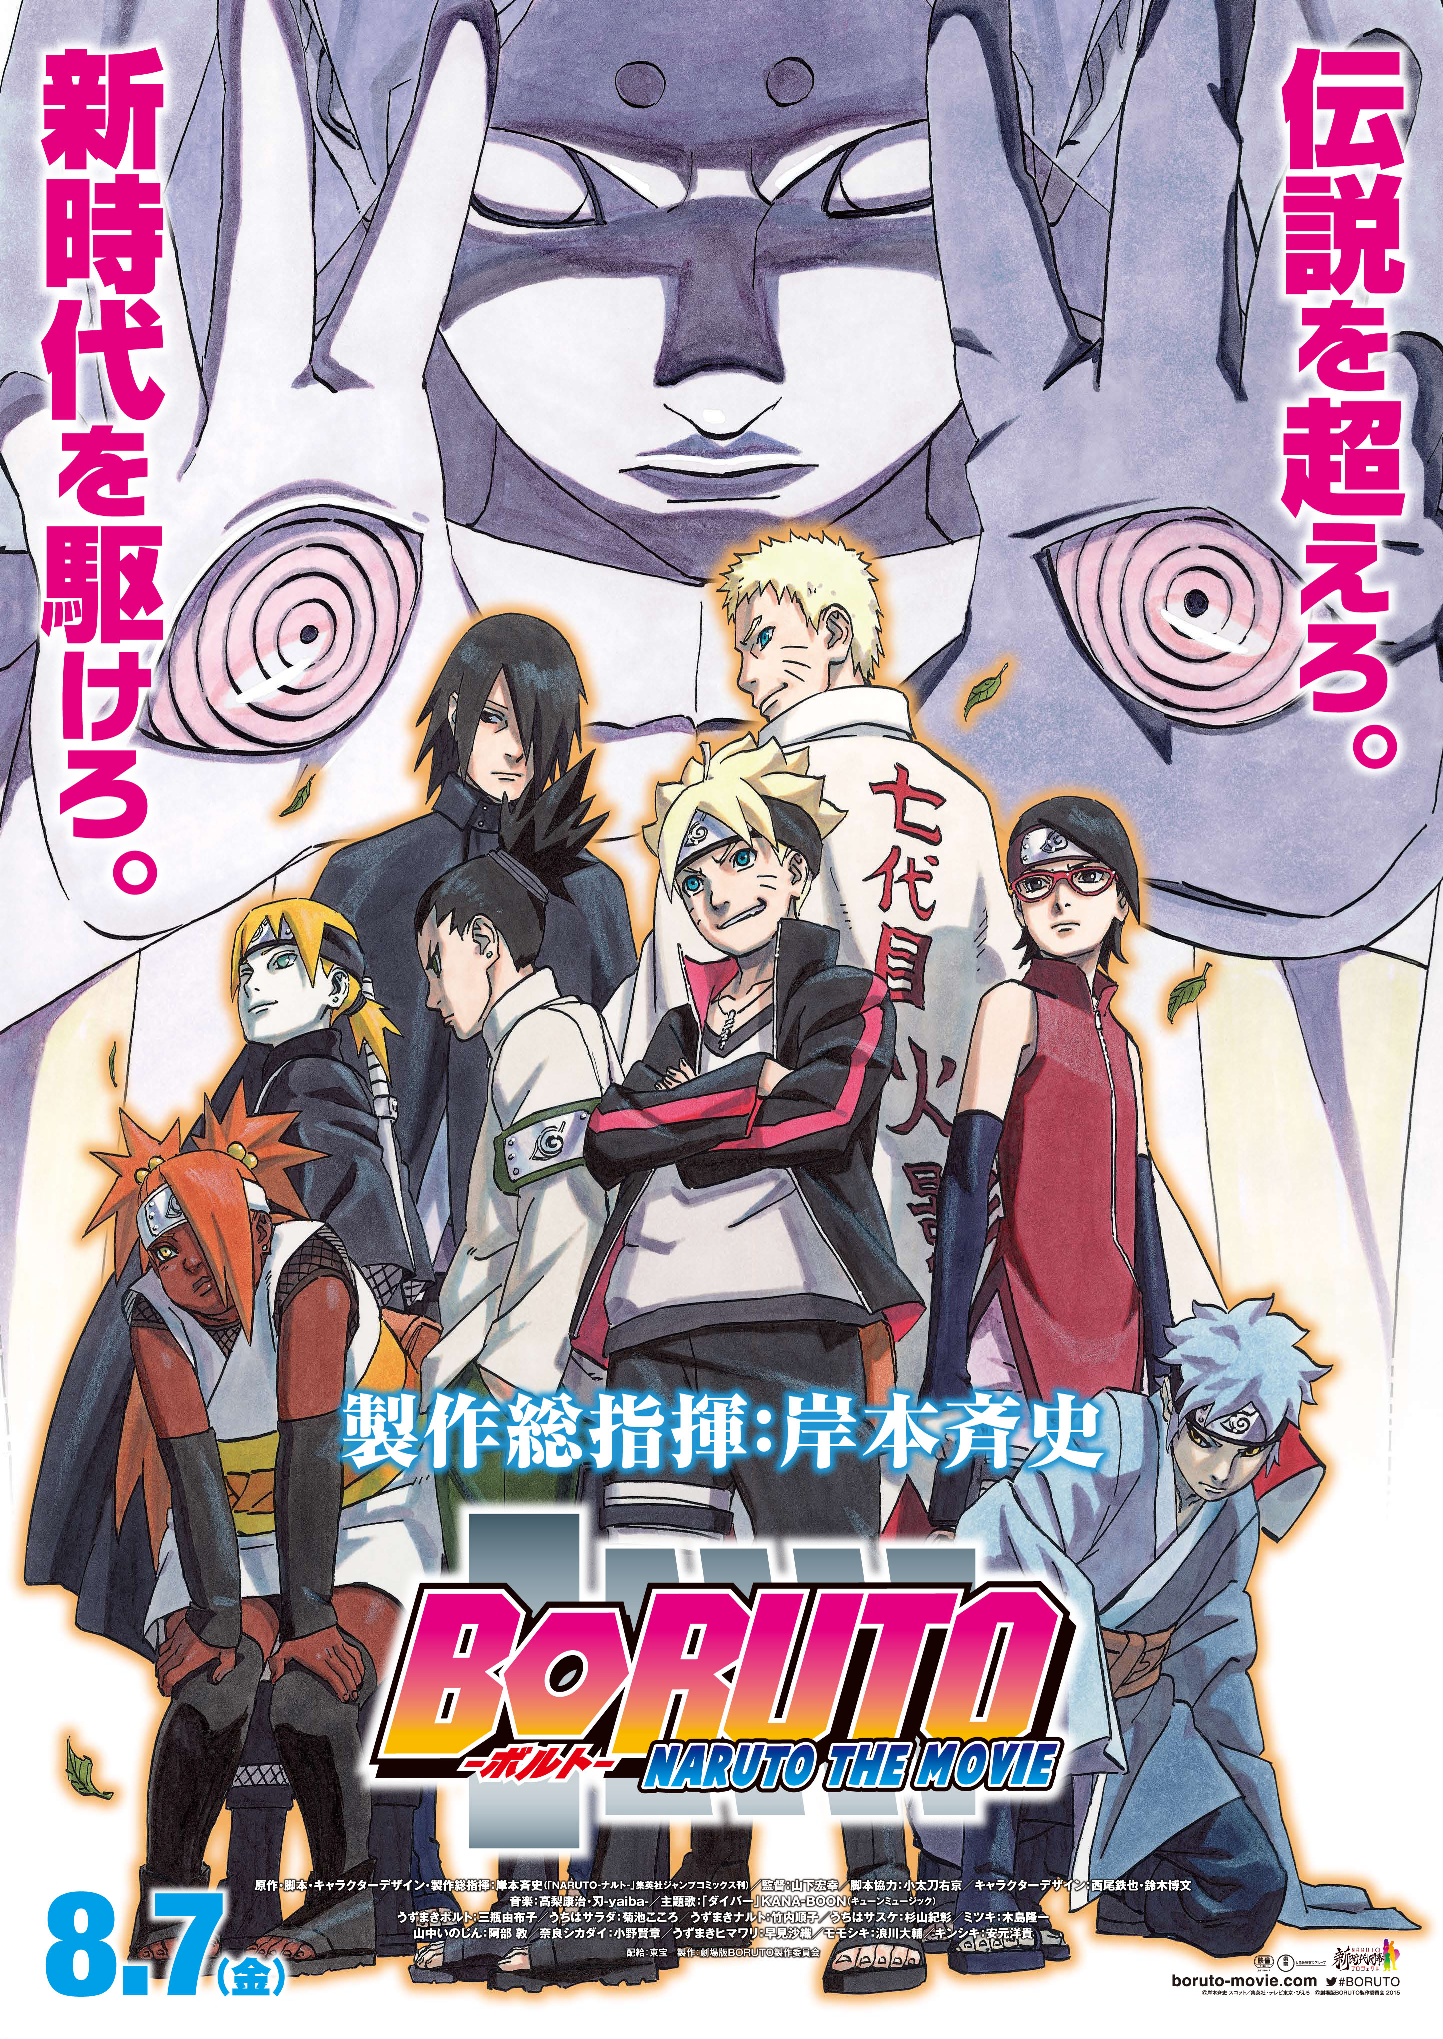 Countdown-For-Naruto-Next-Generation-Revealed-on-Shounen-Jump-Website 2